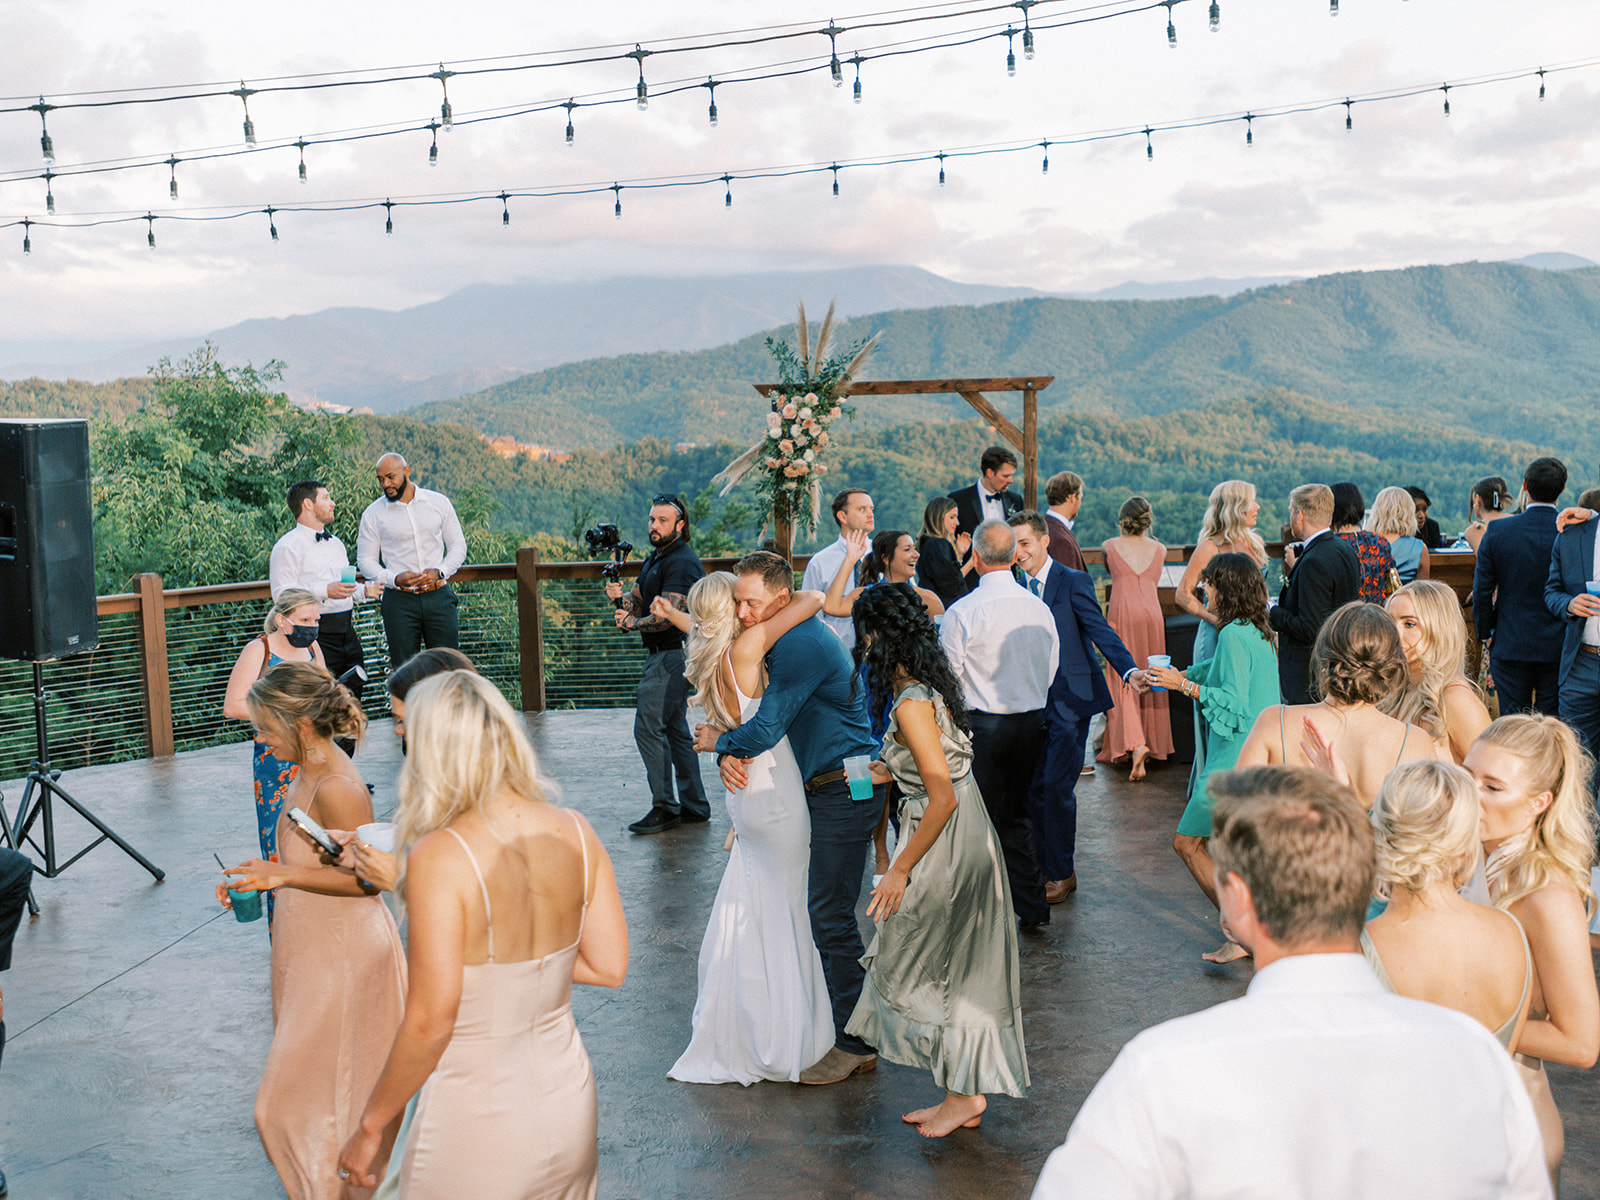 Juicebeats Photography | The Magnolia Venue | Light & airy wedding in neutral tones